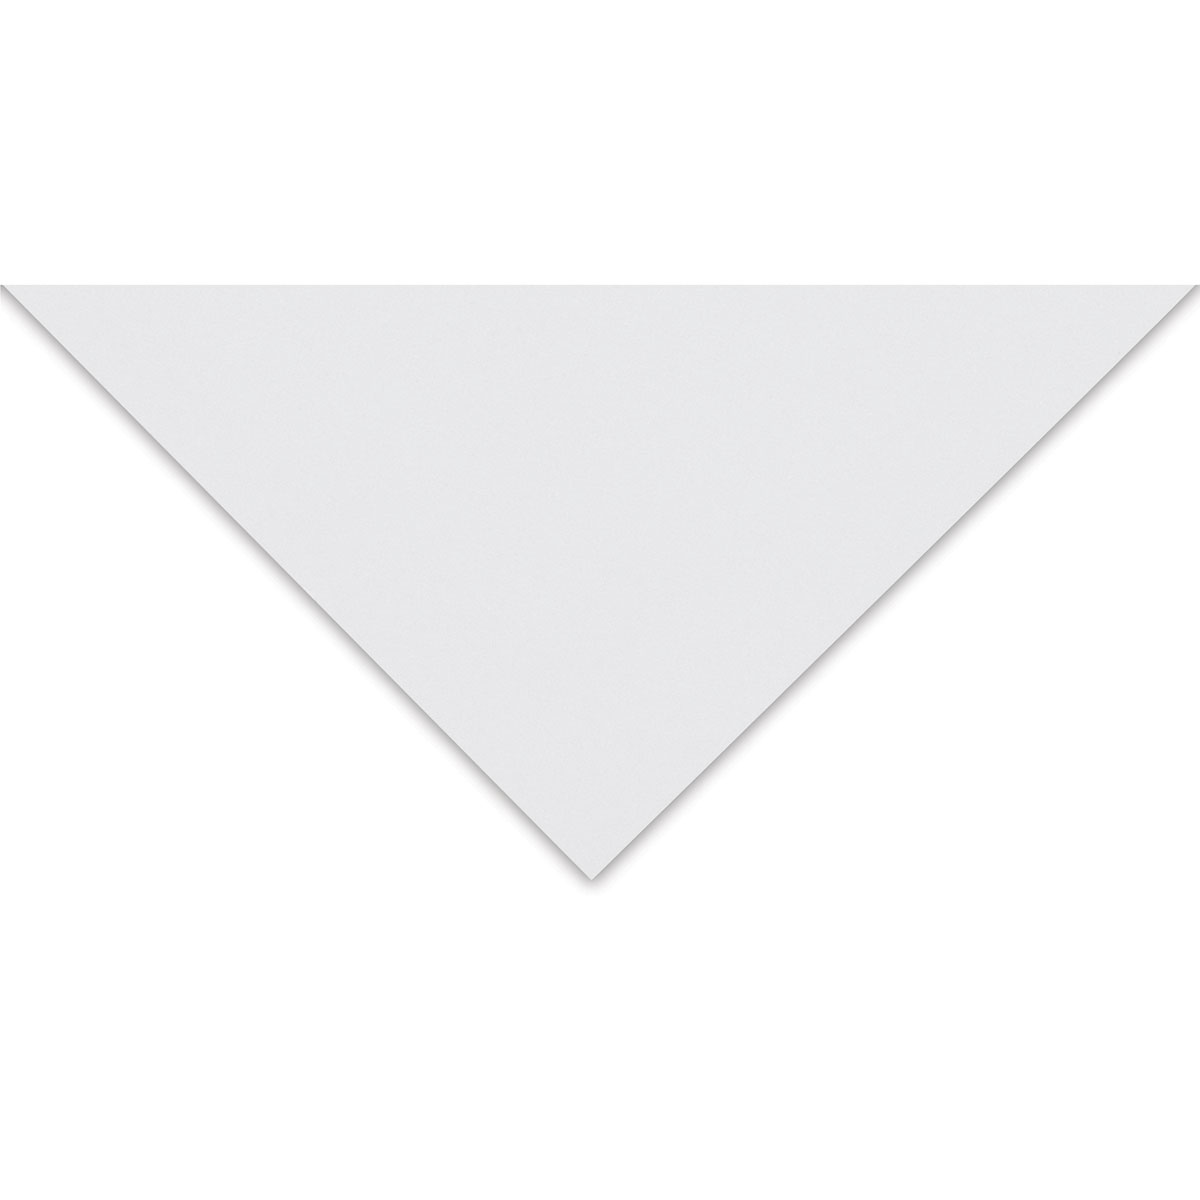 Crescent RagMat Noir Matboard - 32' x 40', White